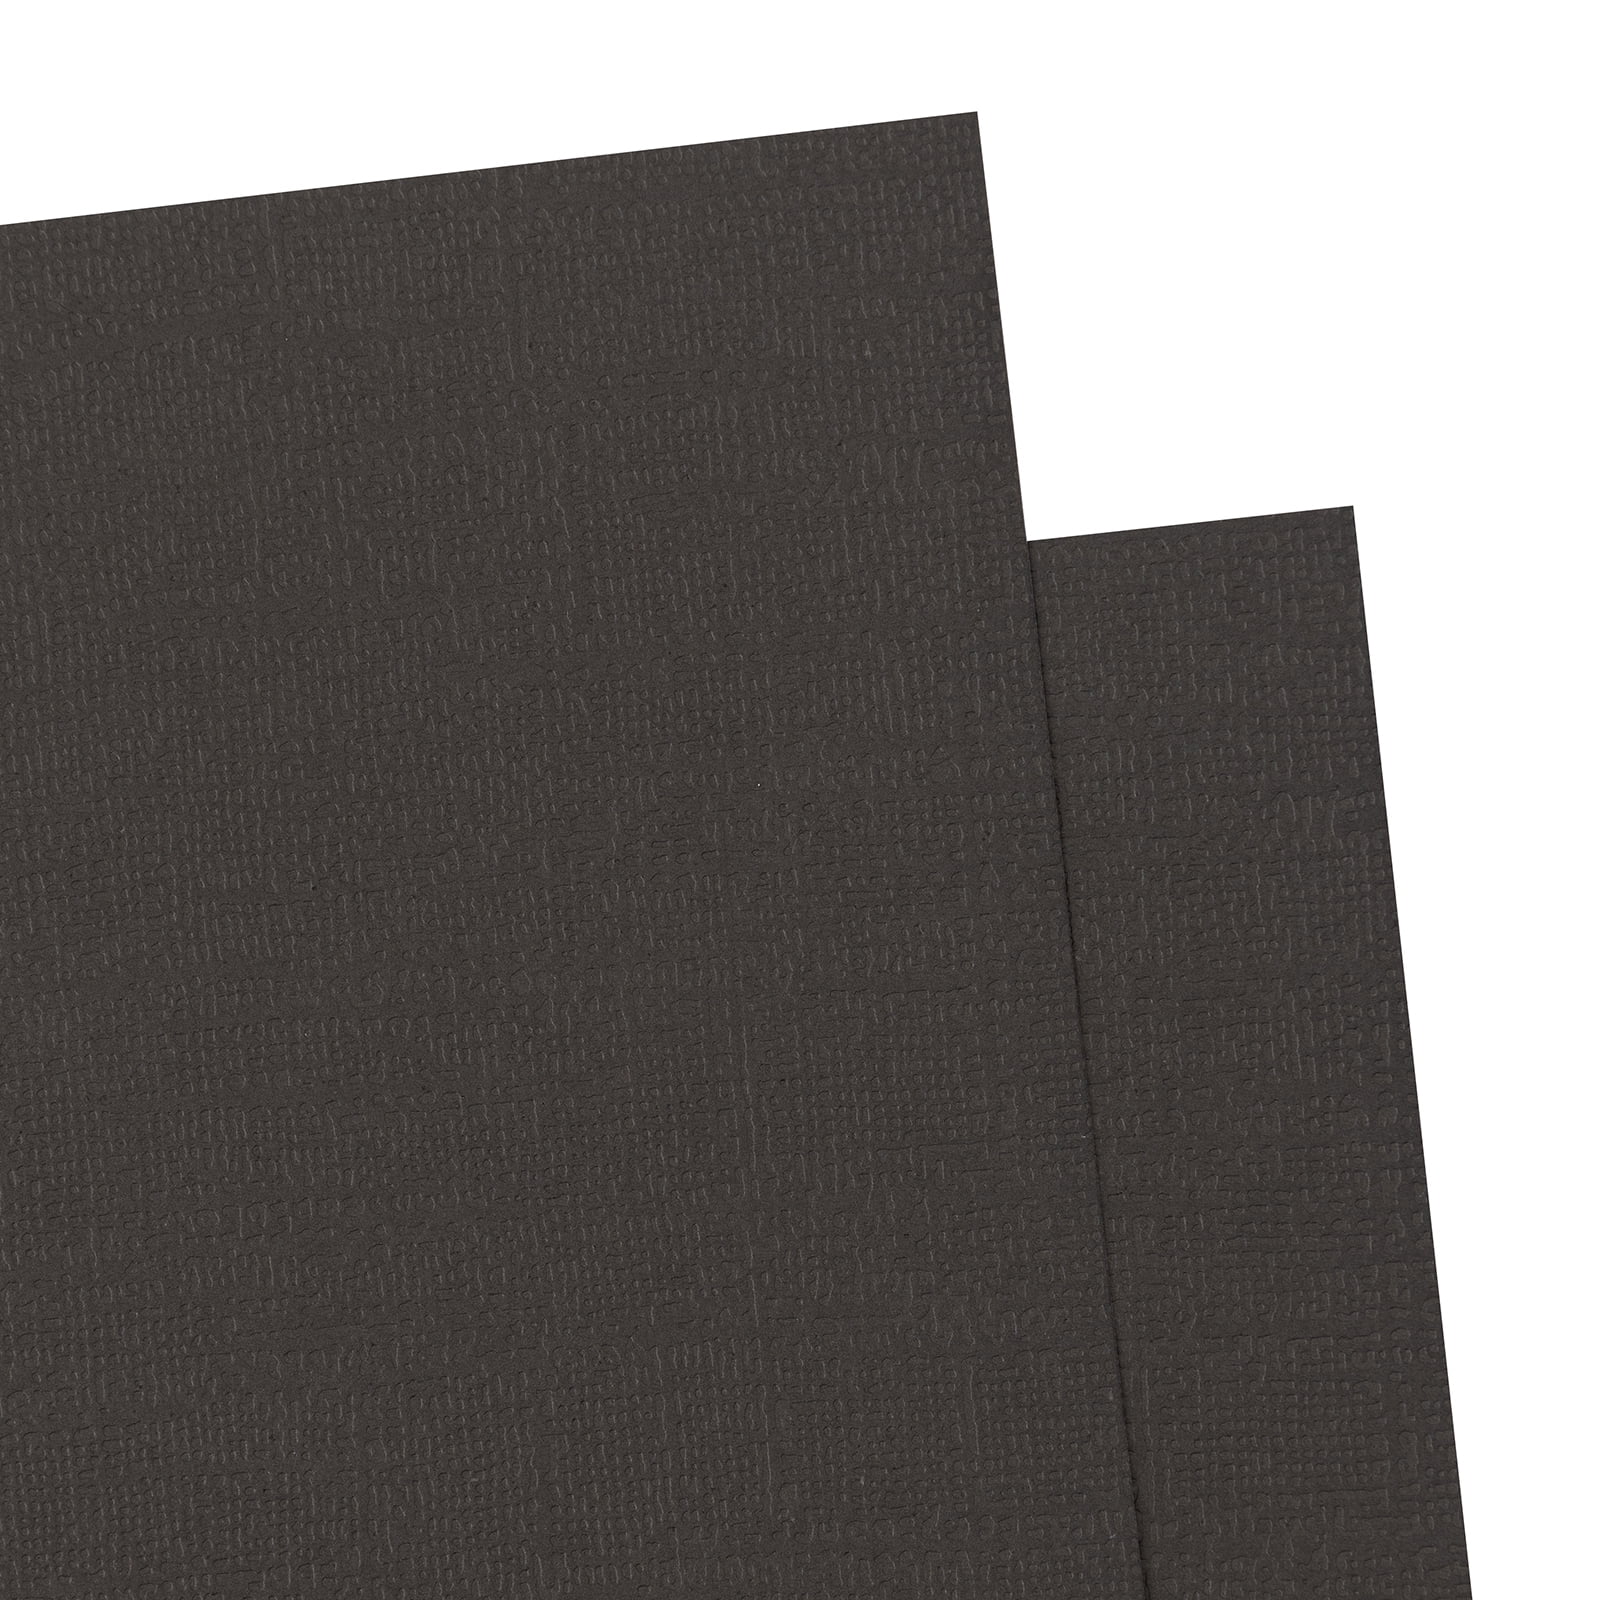 Colorbok Midnight Black Textured Cardstock, 12x12, 121 lb./180